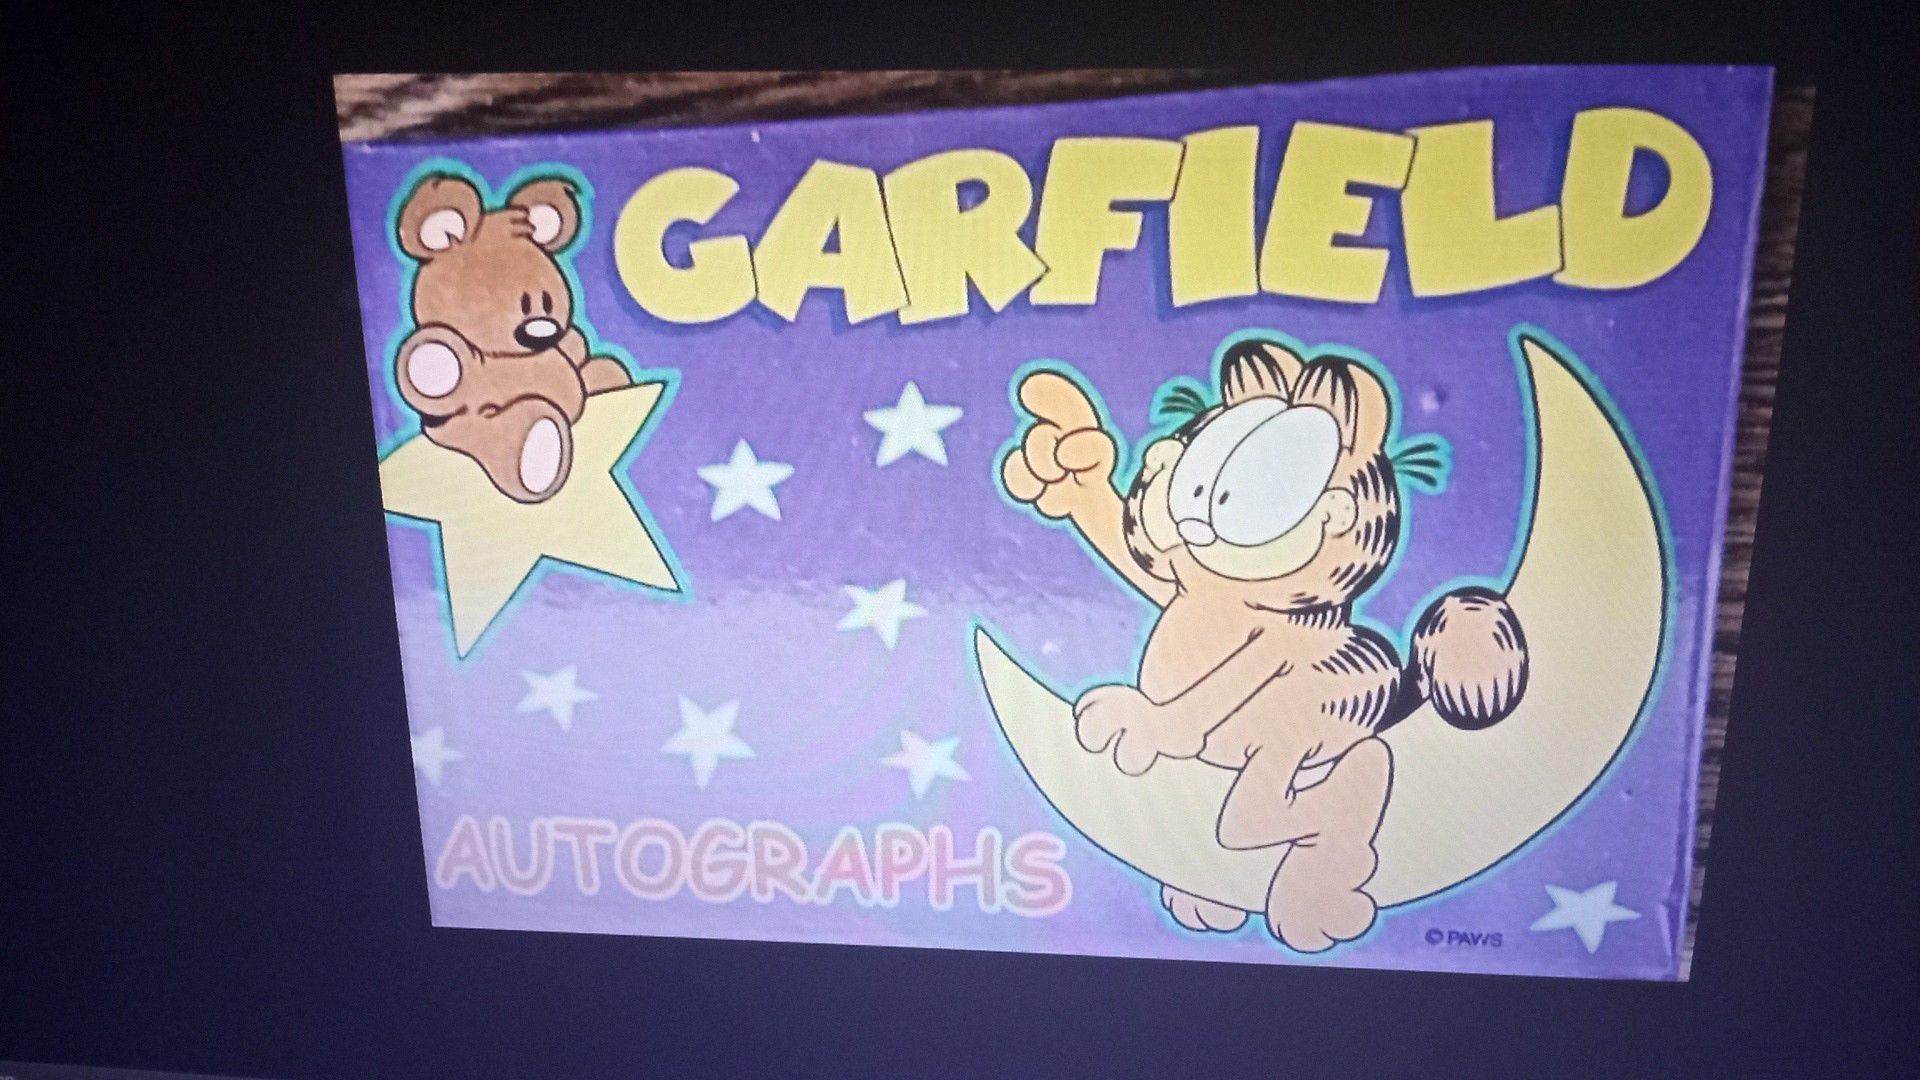 Garfield the cat autograph book